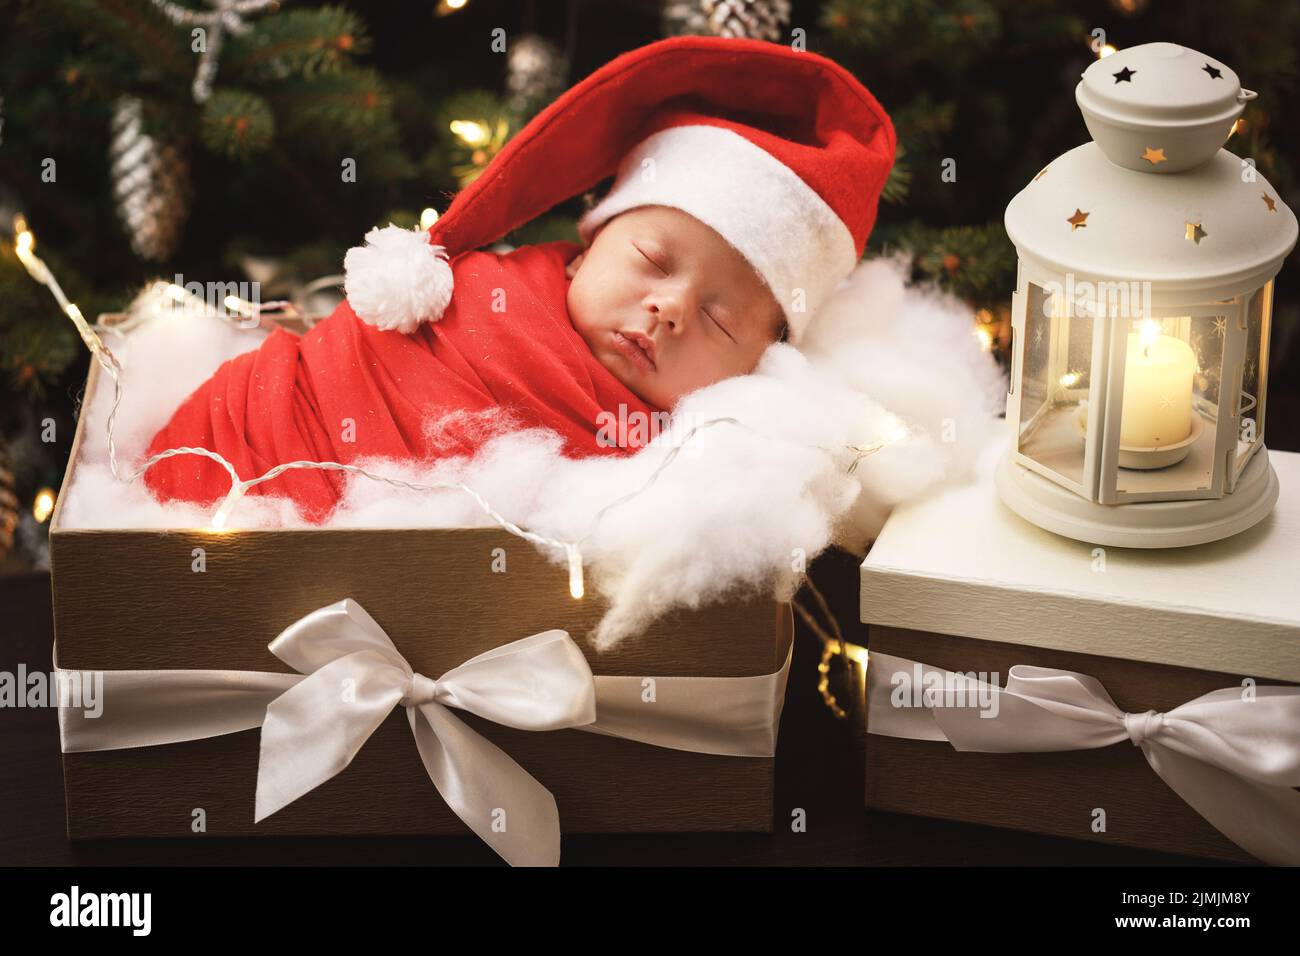 Cute newborn baby wearing Santa Claus hat is sleeping in the Christmas gift box Stock Photo